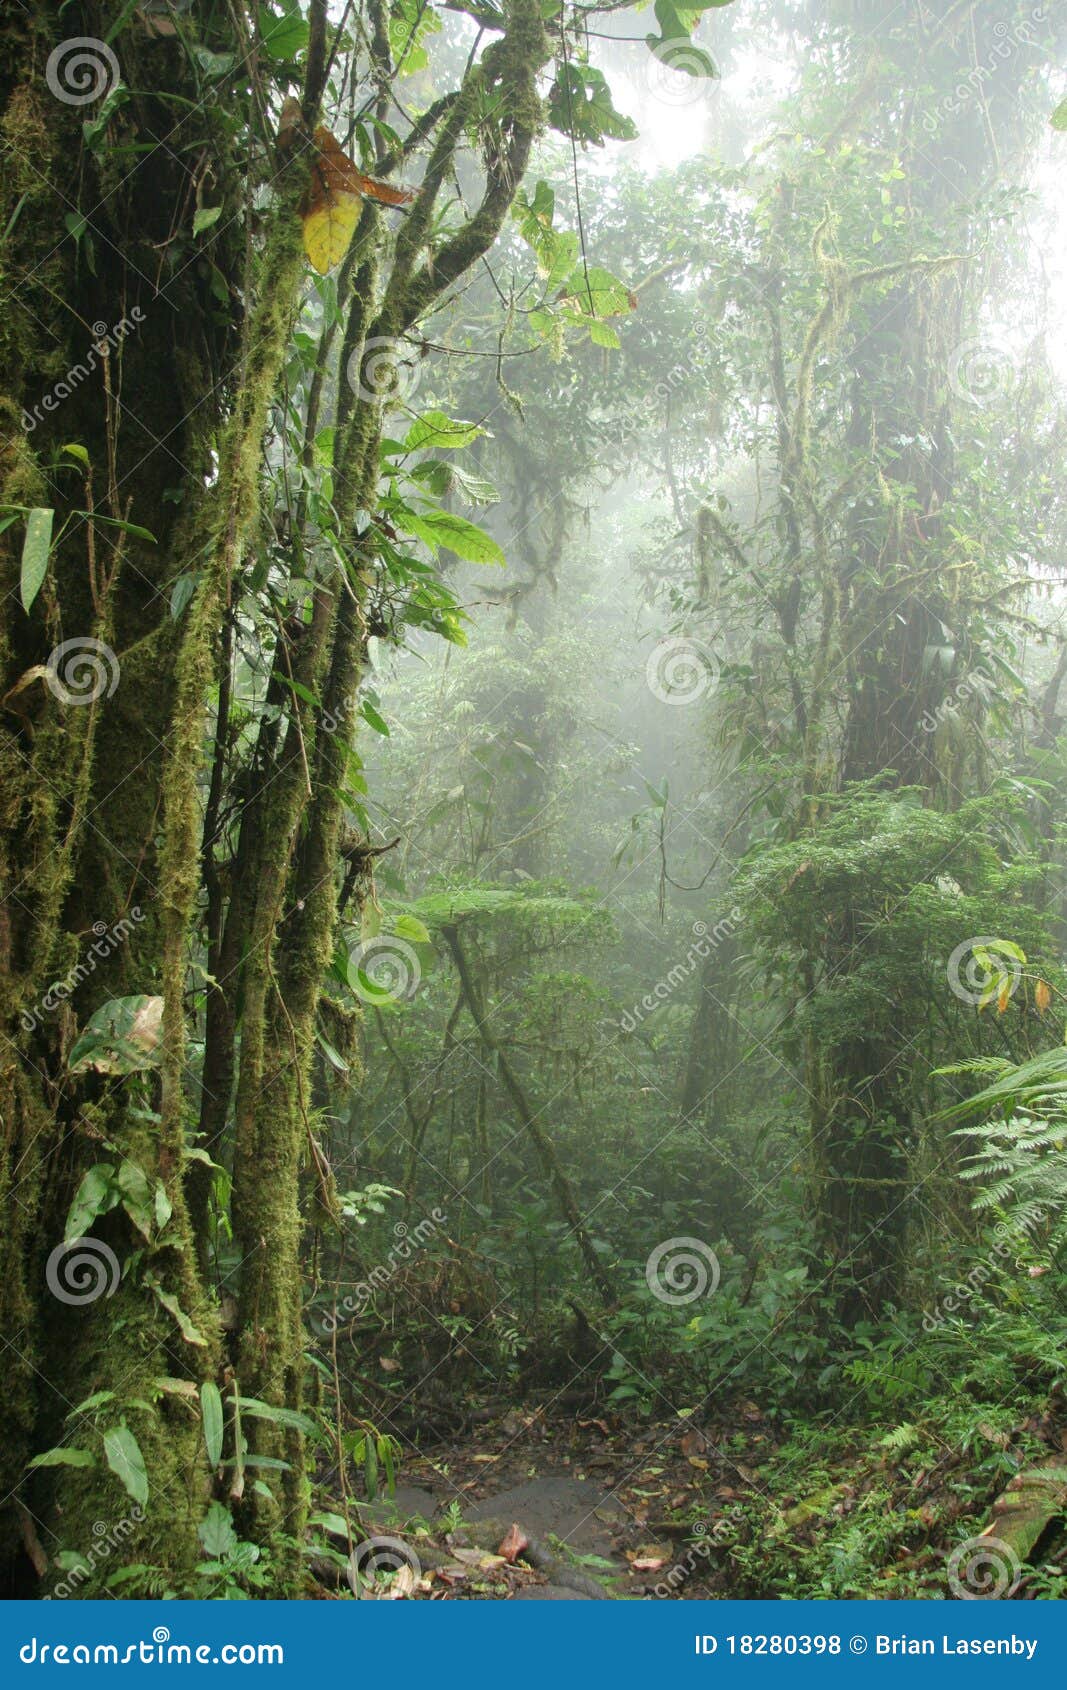 monteverde cloud forest nature preserve - costa ri